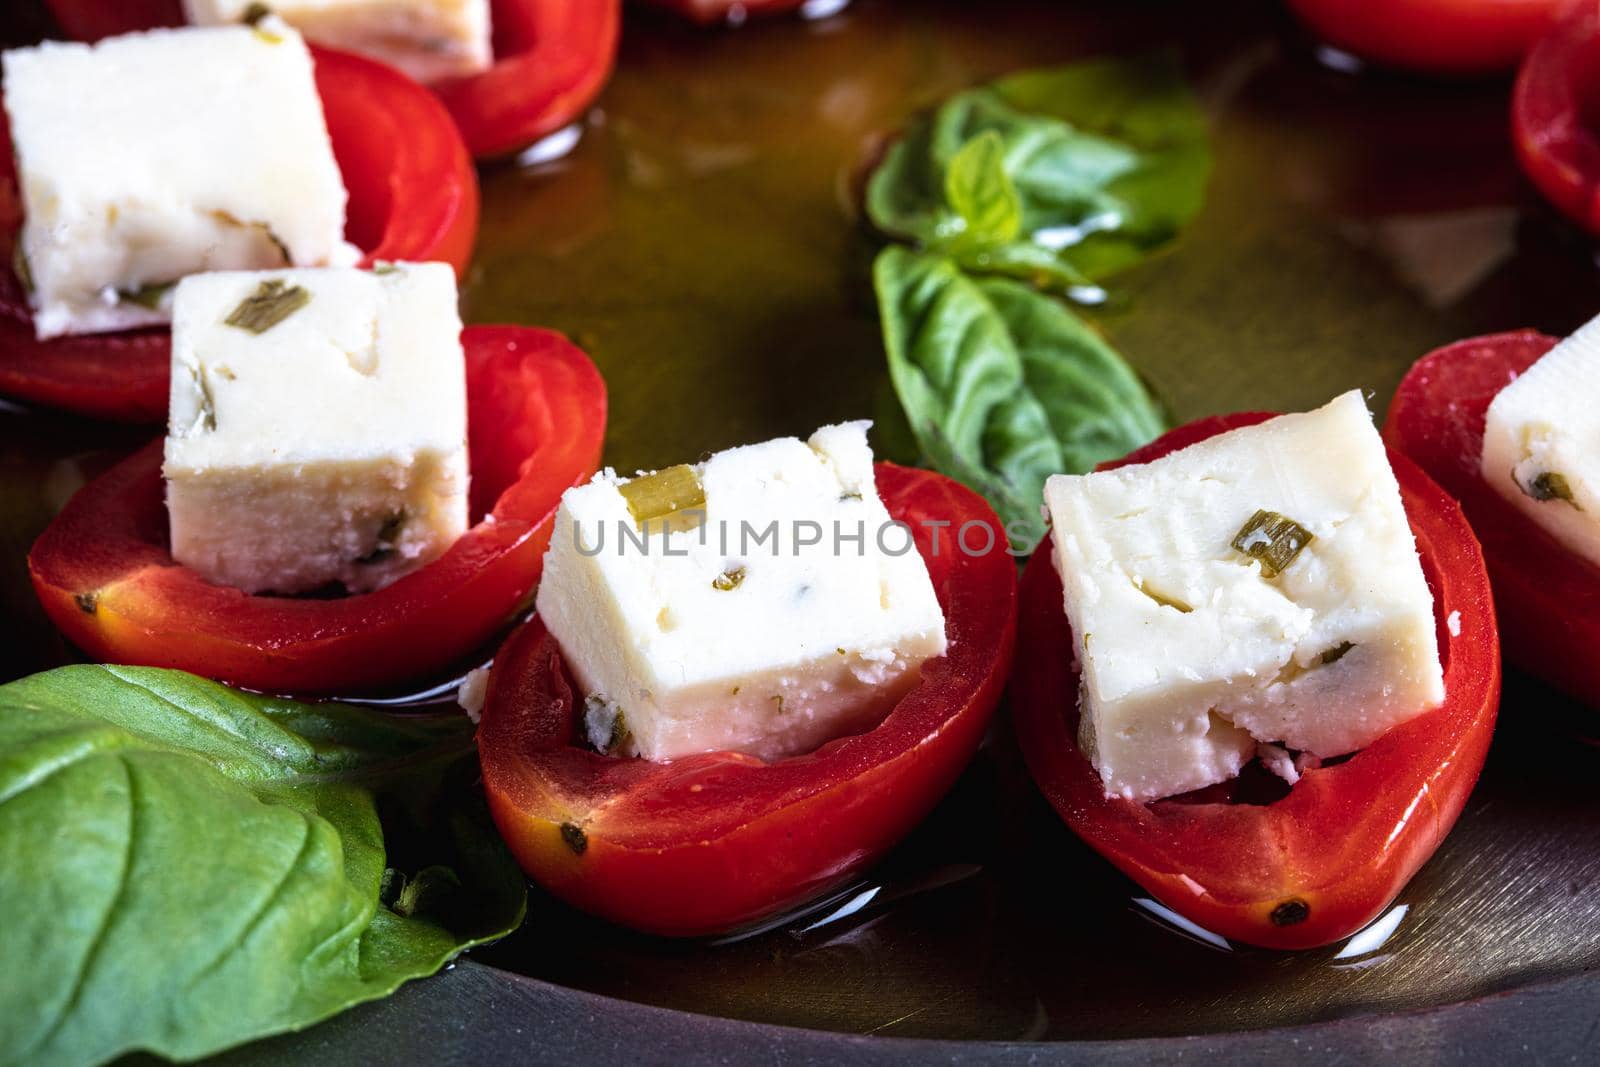 Stuffed tomatoes with cheese and basil by senkaya